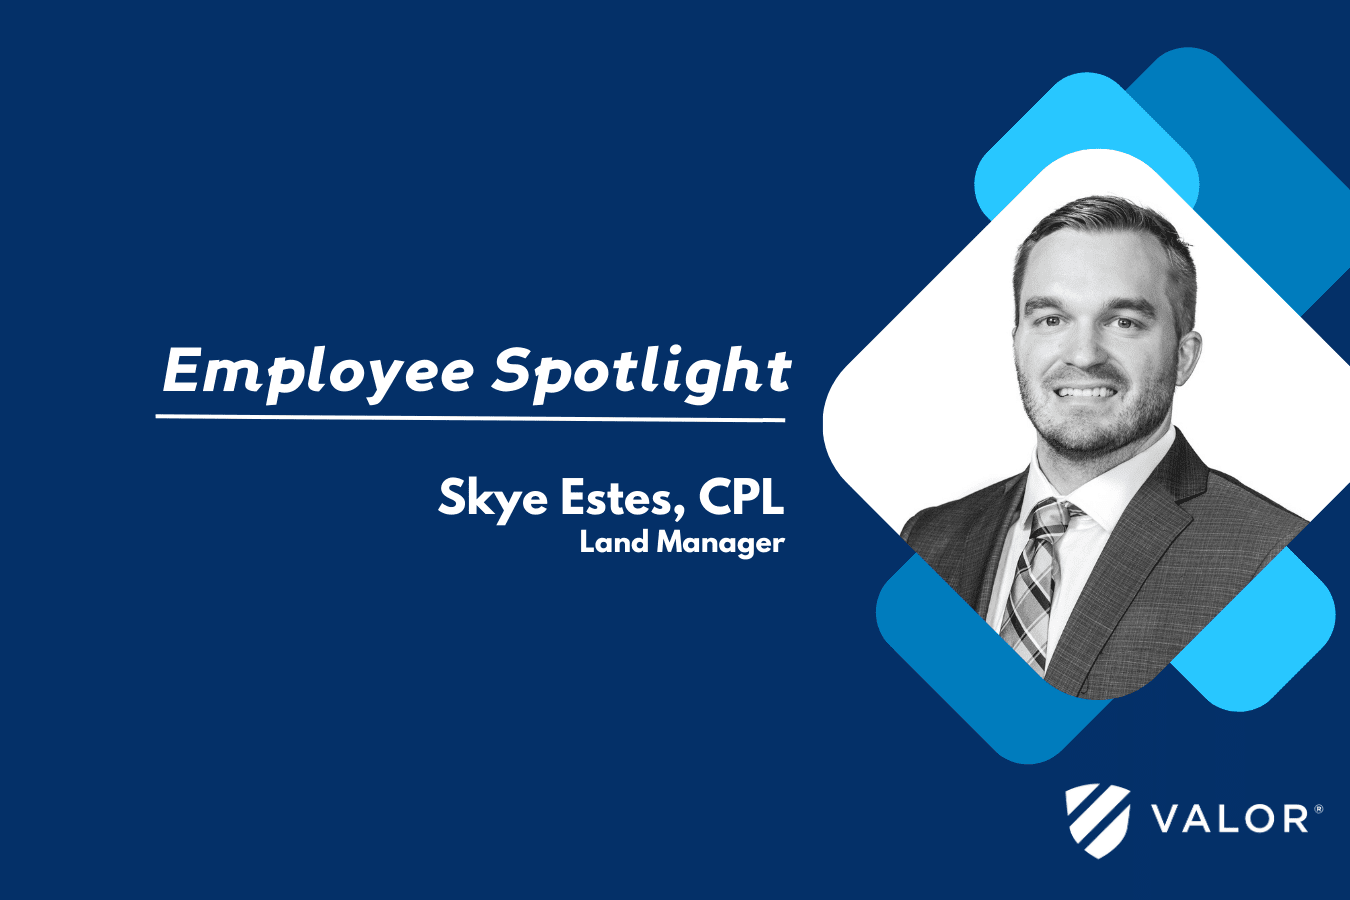 Valor employee spotlight - Skye Estes, CPL, Land & Mineral Manager